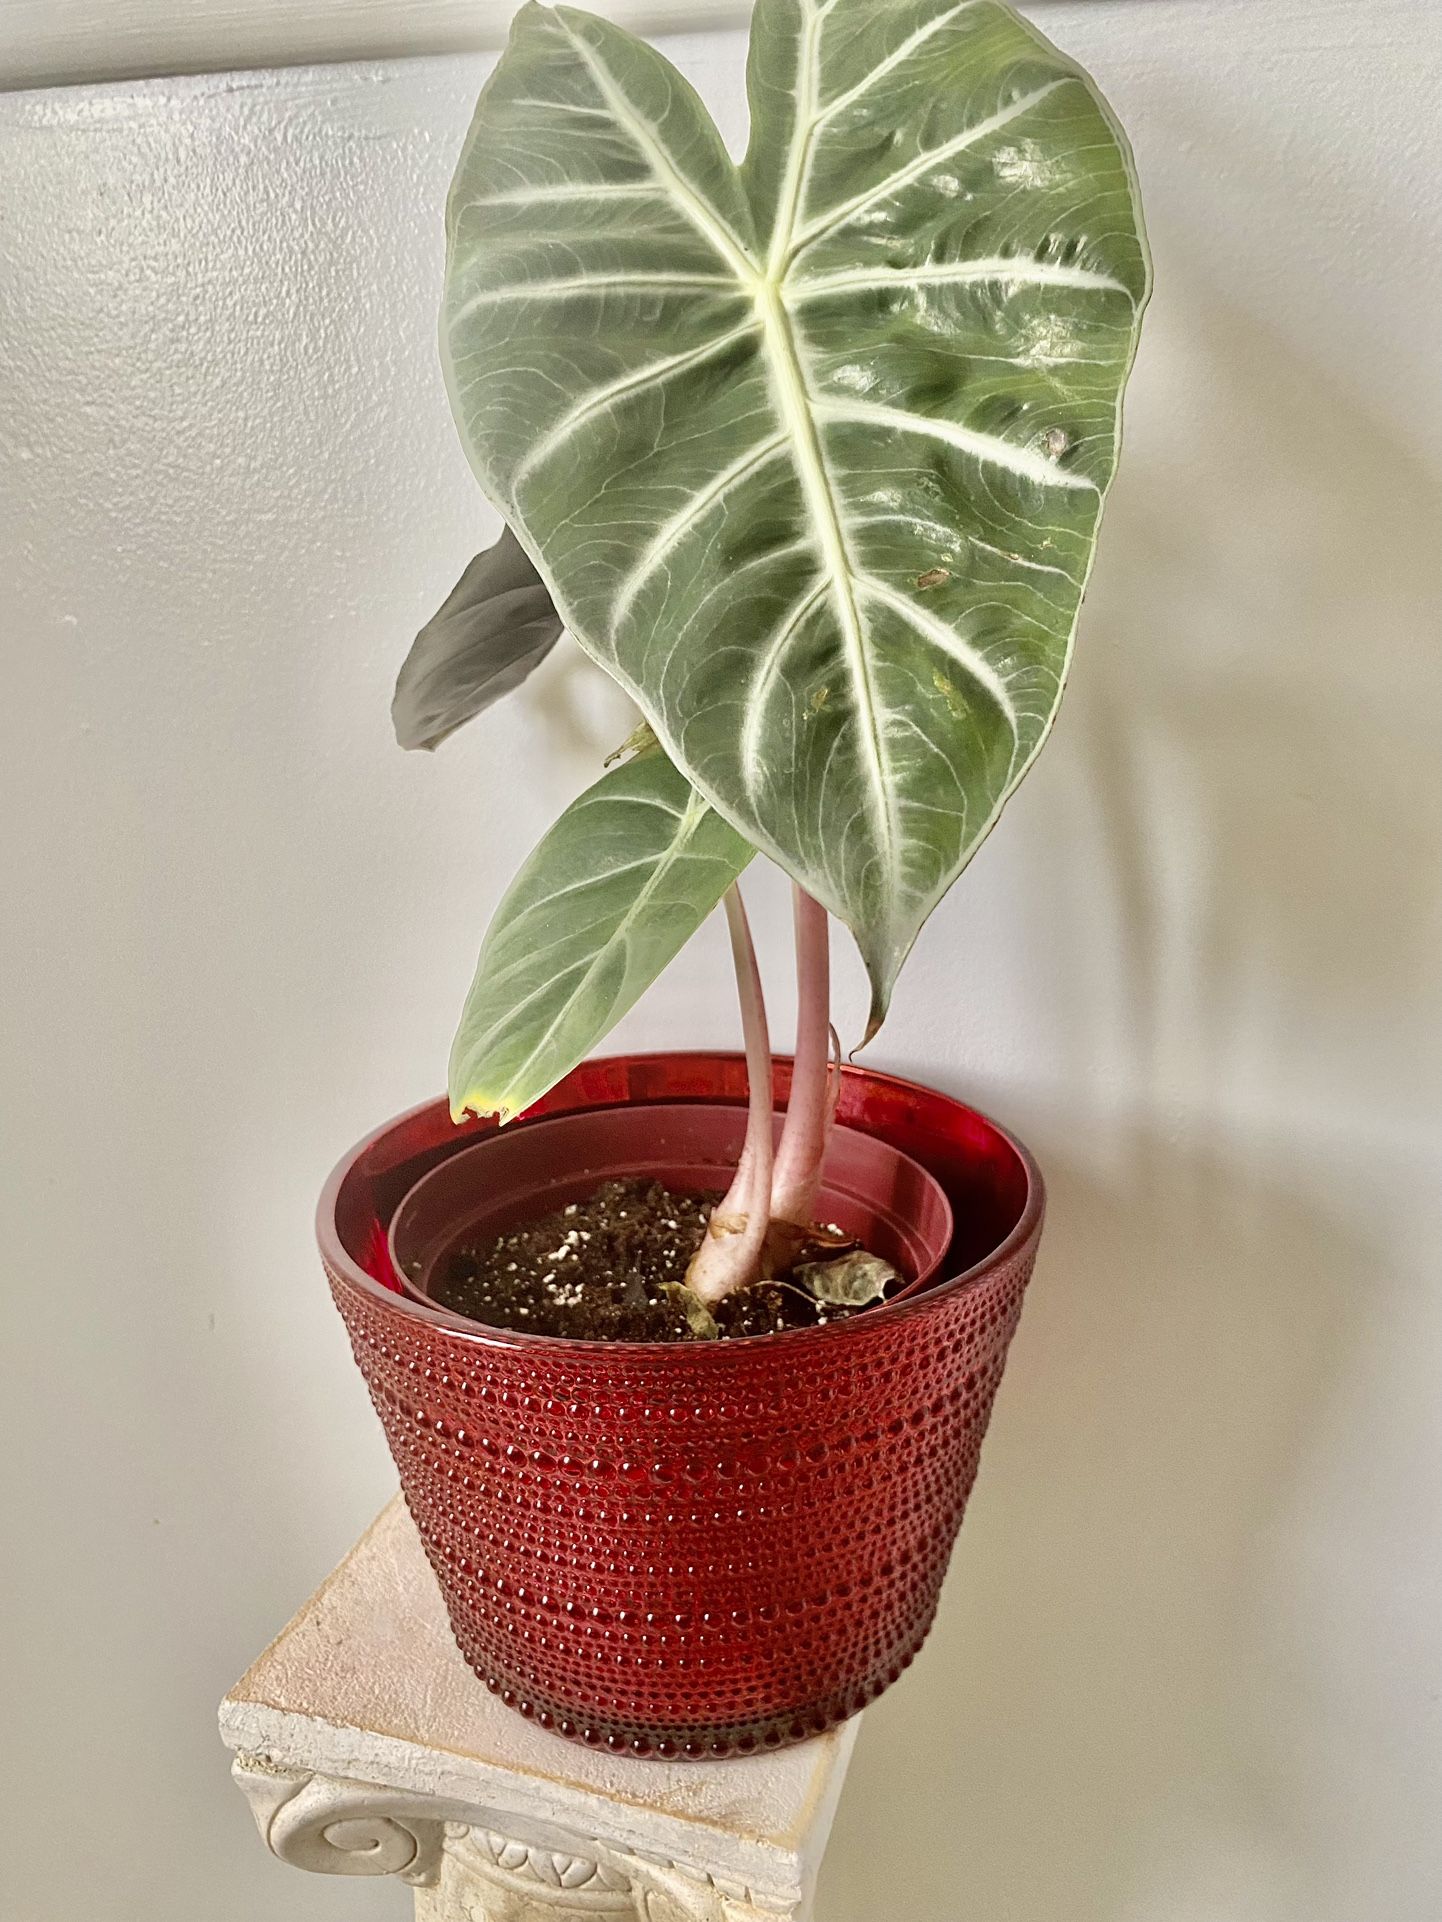 Alocasia  plant with bright red ceramic pot